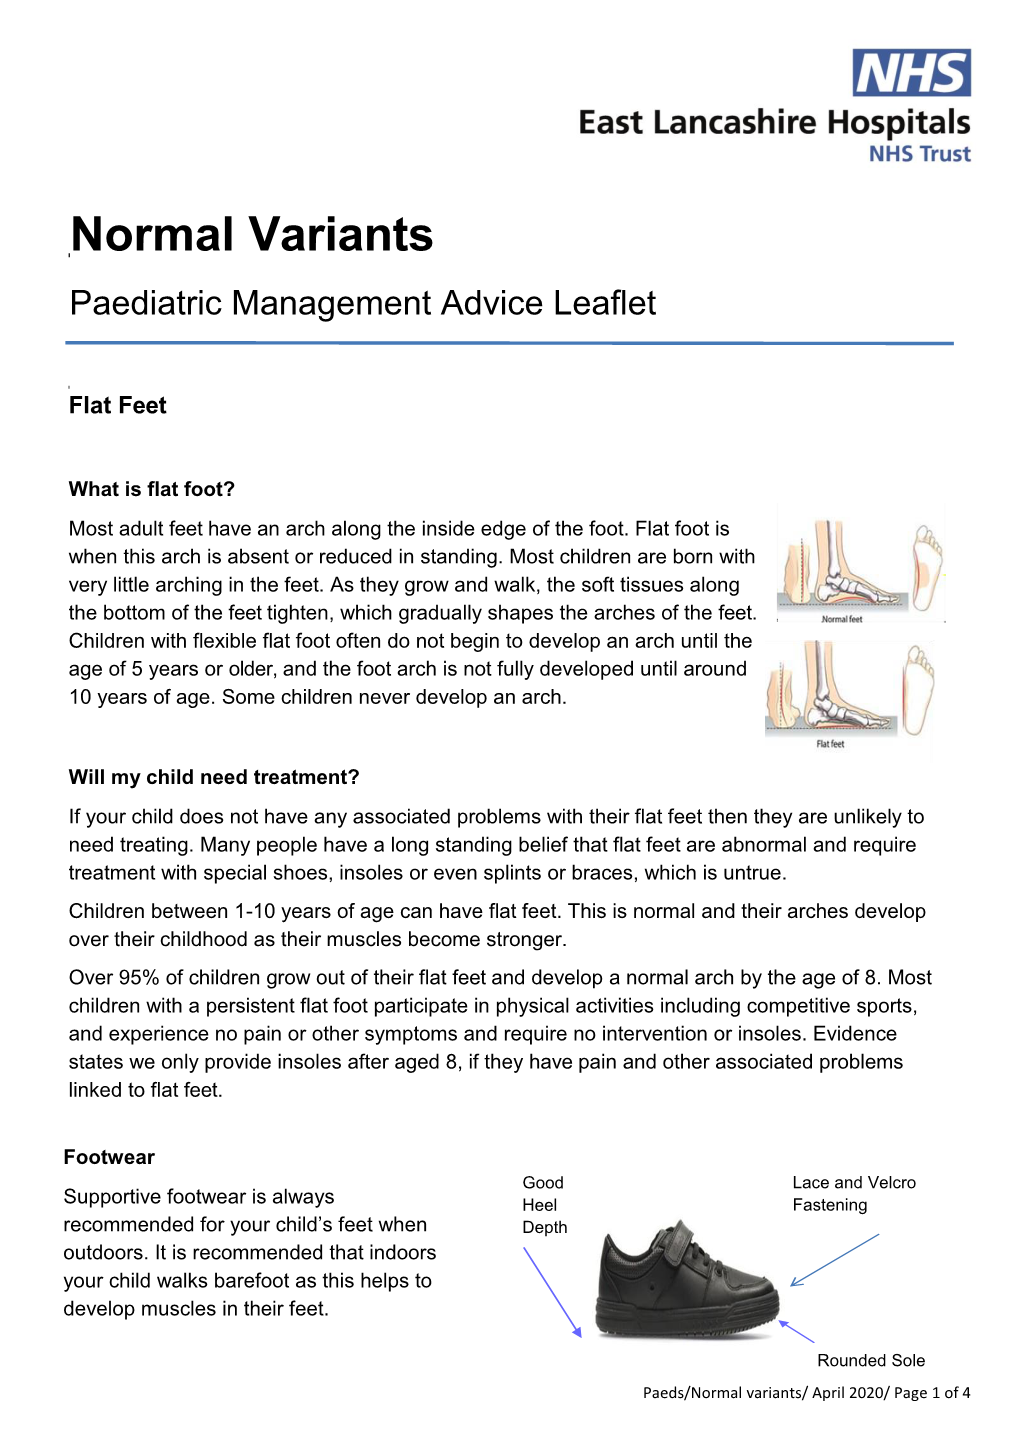 Normal Variants Paediatric Management Advice Leaflet